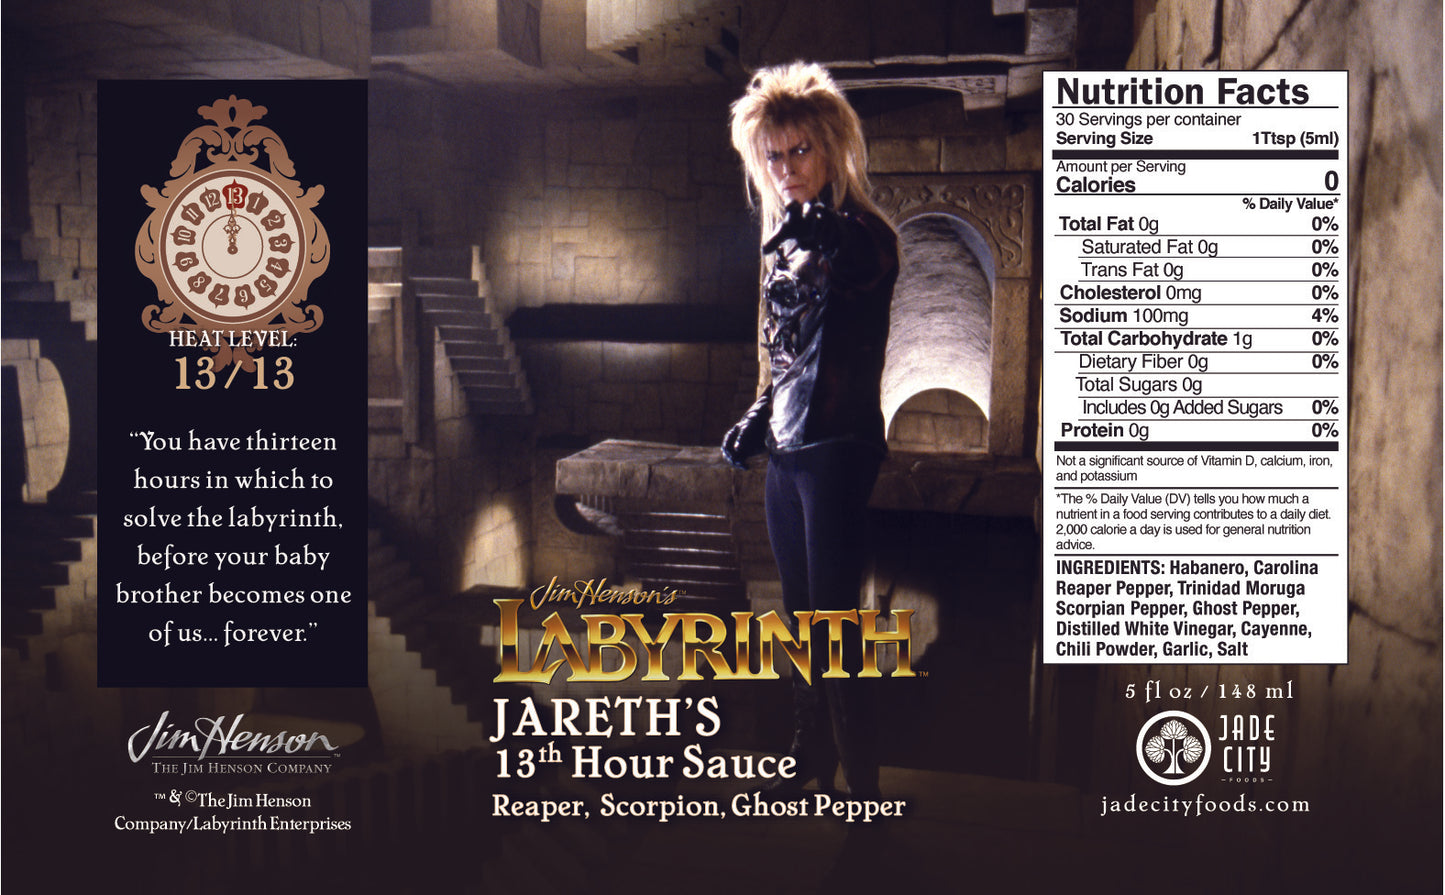 Jareth's 13th Hour Sauce : Reaper, Scorpion, Ghost Pepper